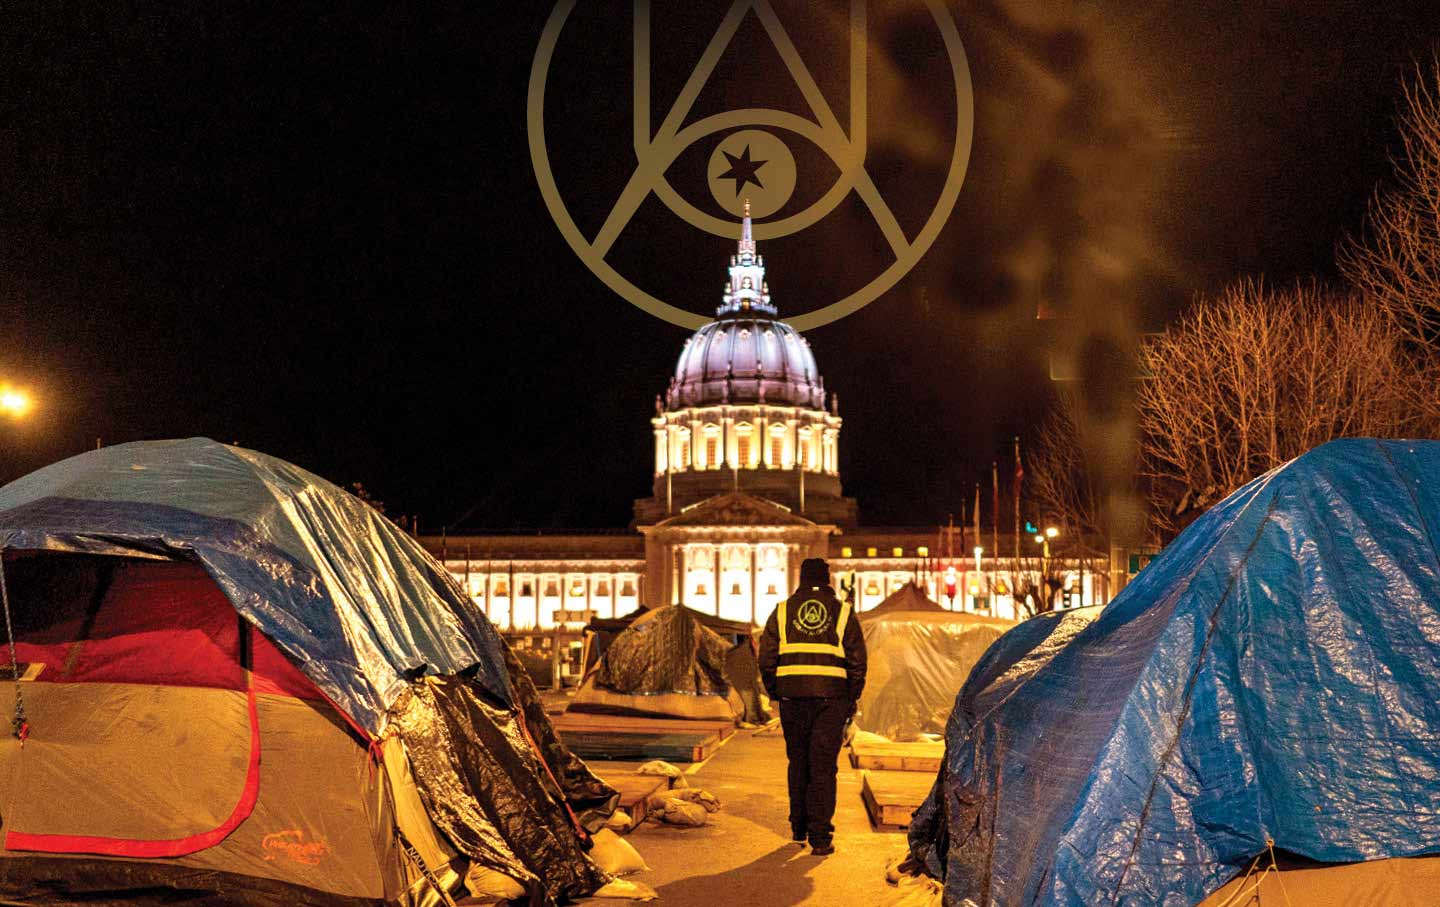 An Urban Alchemy ambassador patrols an encampment in front of San Francisco’s City Hall.